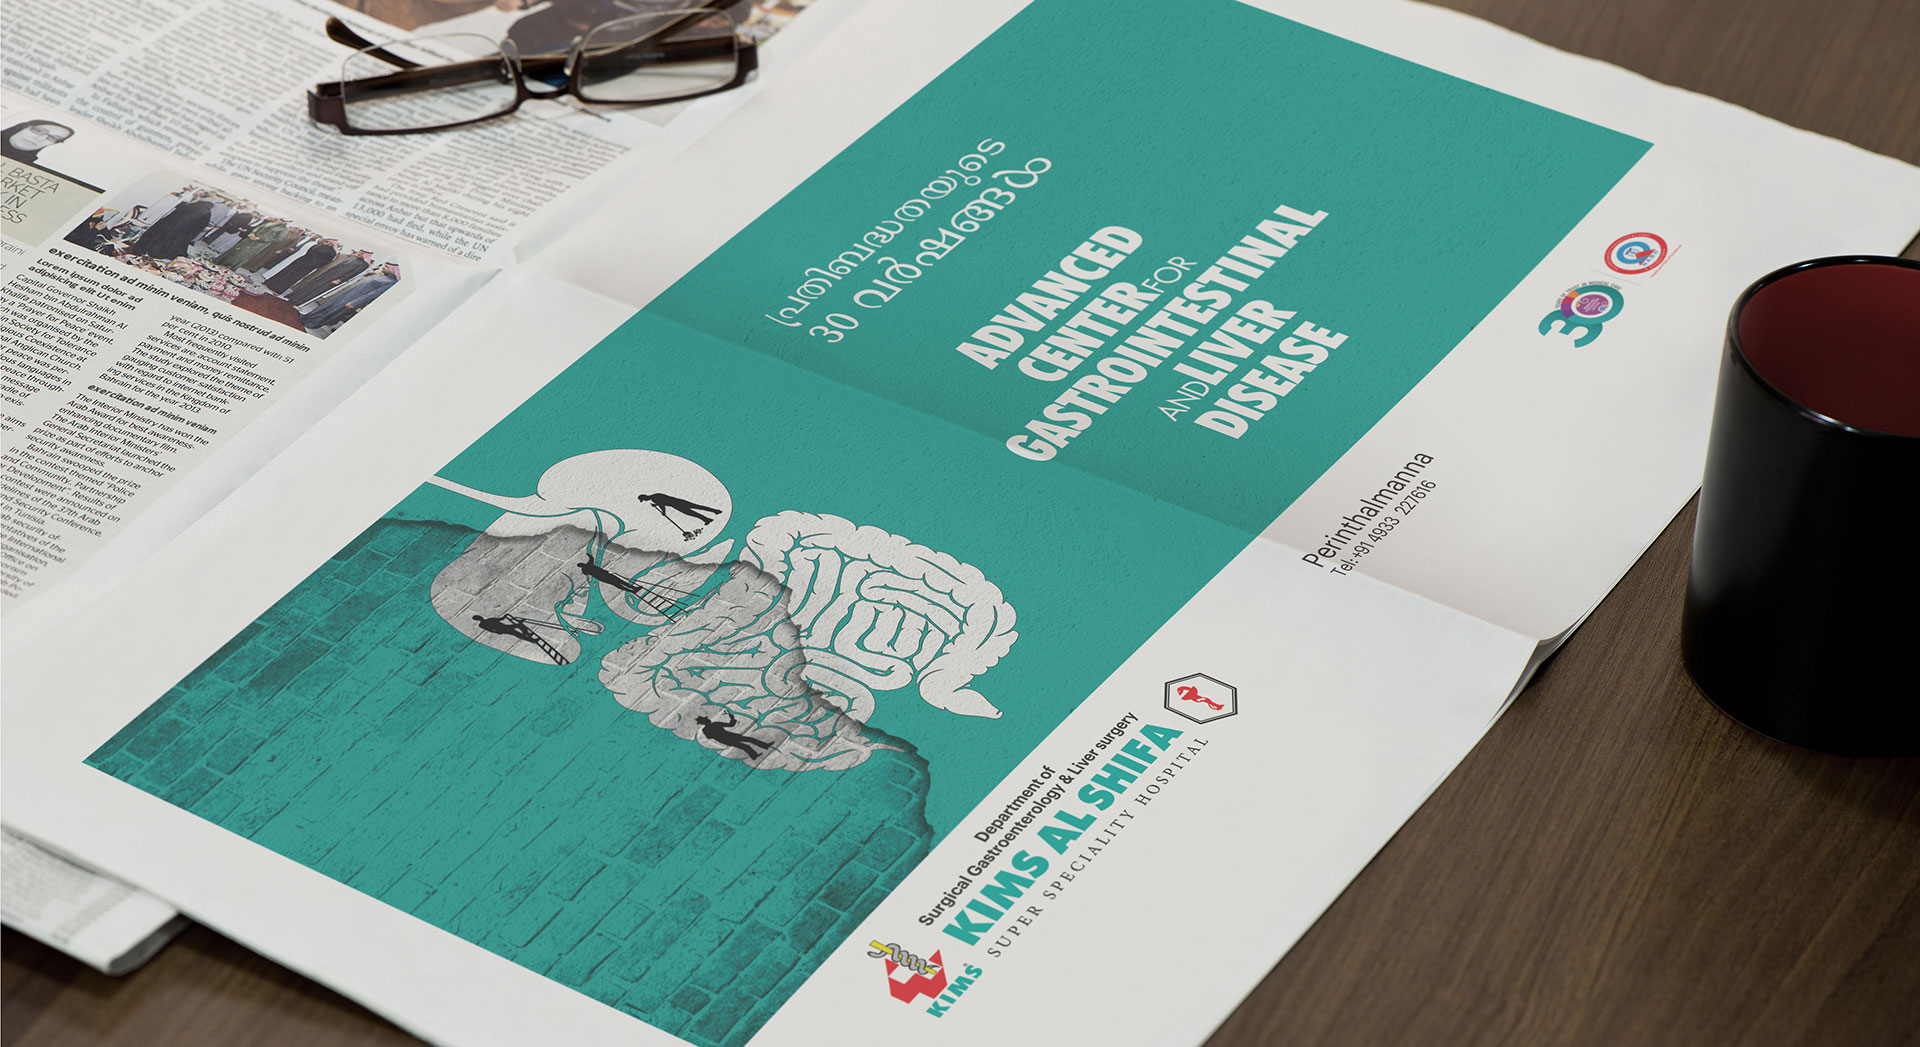 KIMS Al Shifa Hospital - 30 years of responsibility advertisement on newspaper